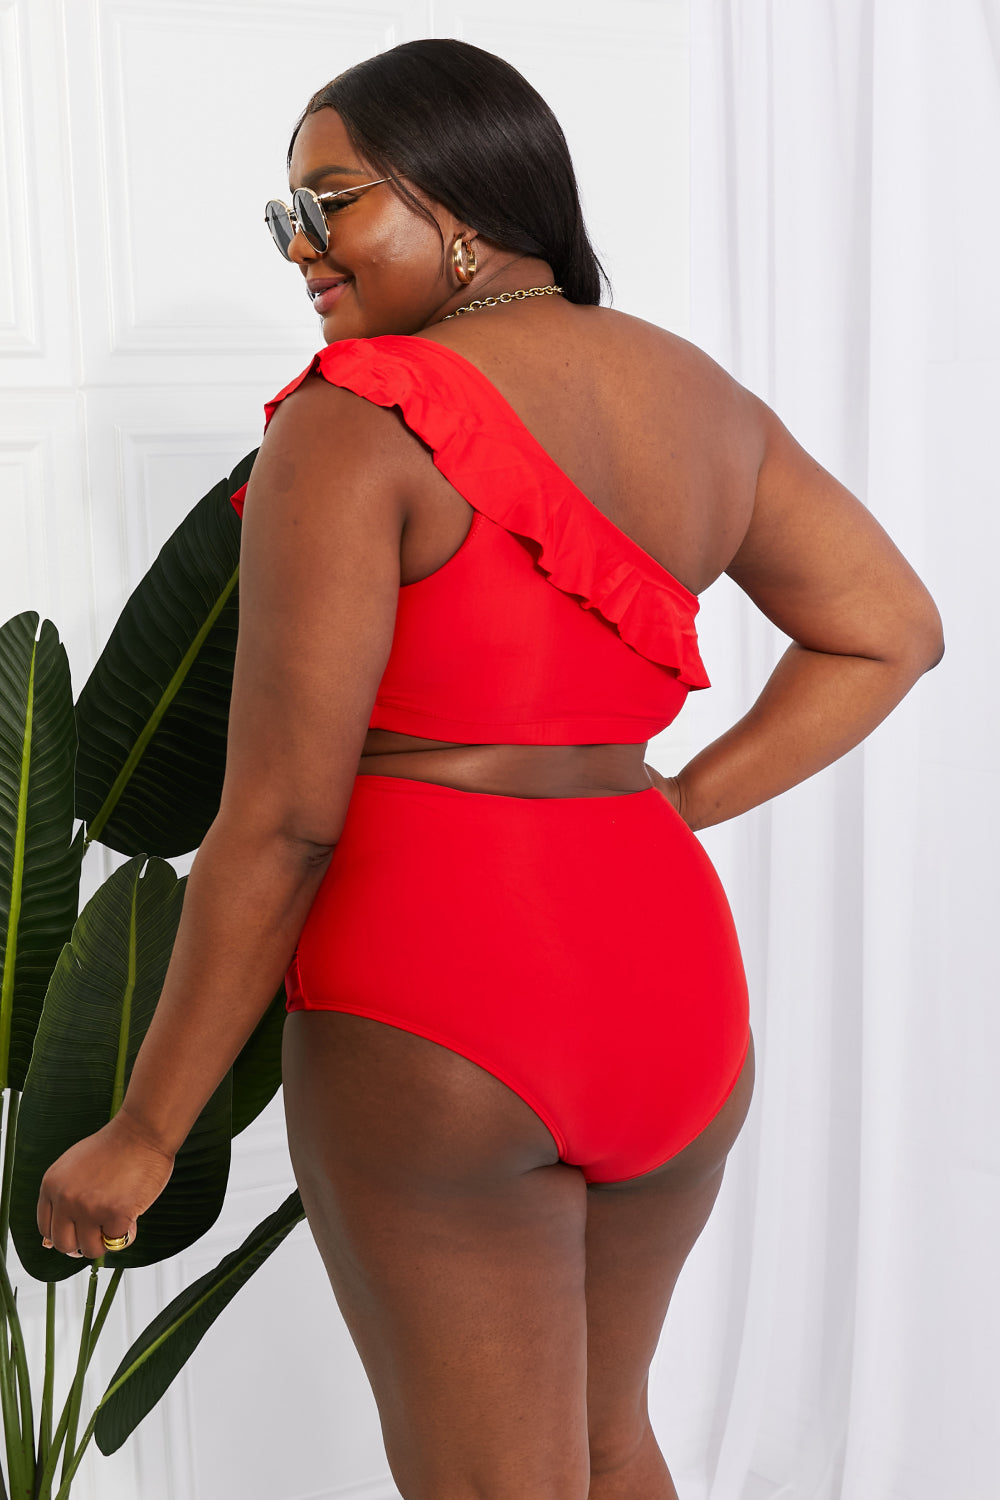 Marina West Swim Seaside Romance Ruffle One-Shoulder Bikini in Red Scarlett Swimwear by Vim&Vigor | Vim&Vigor Boutique